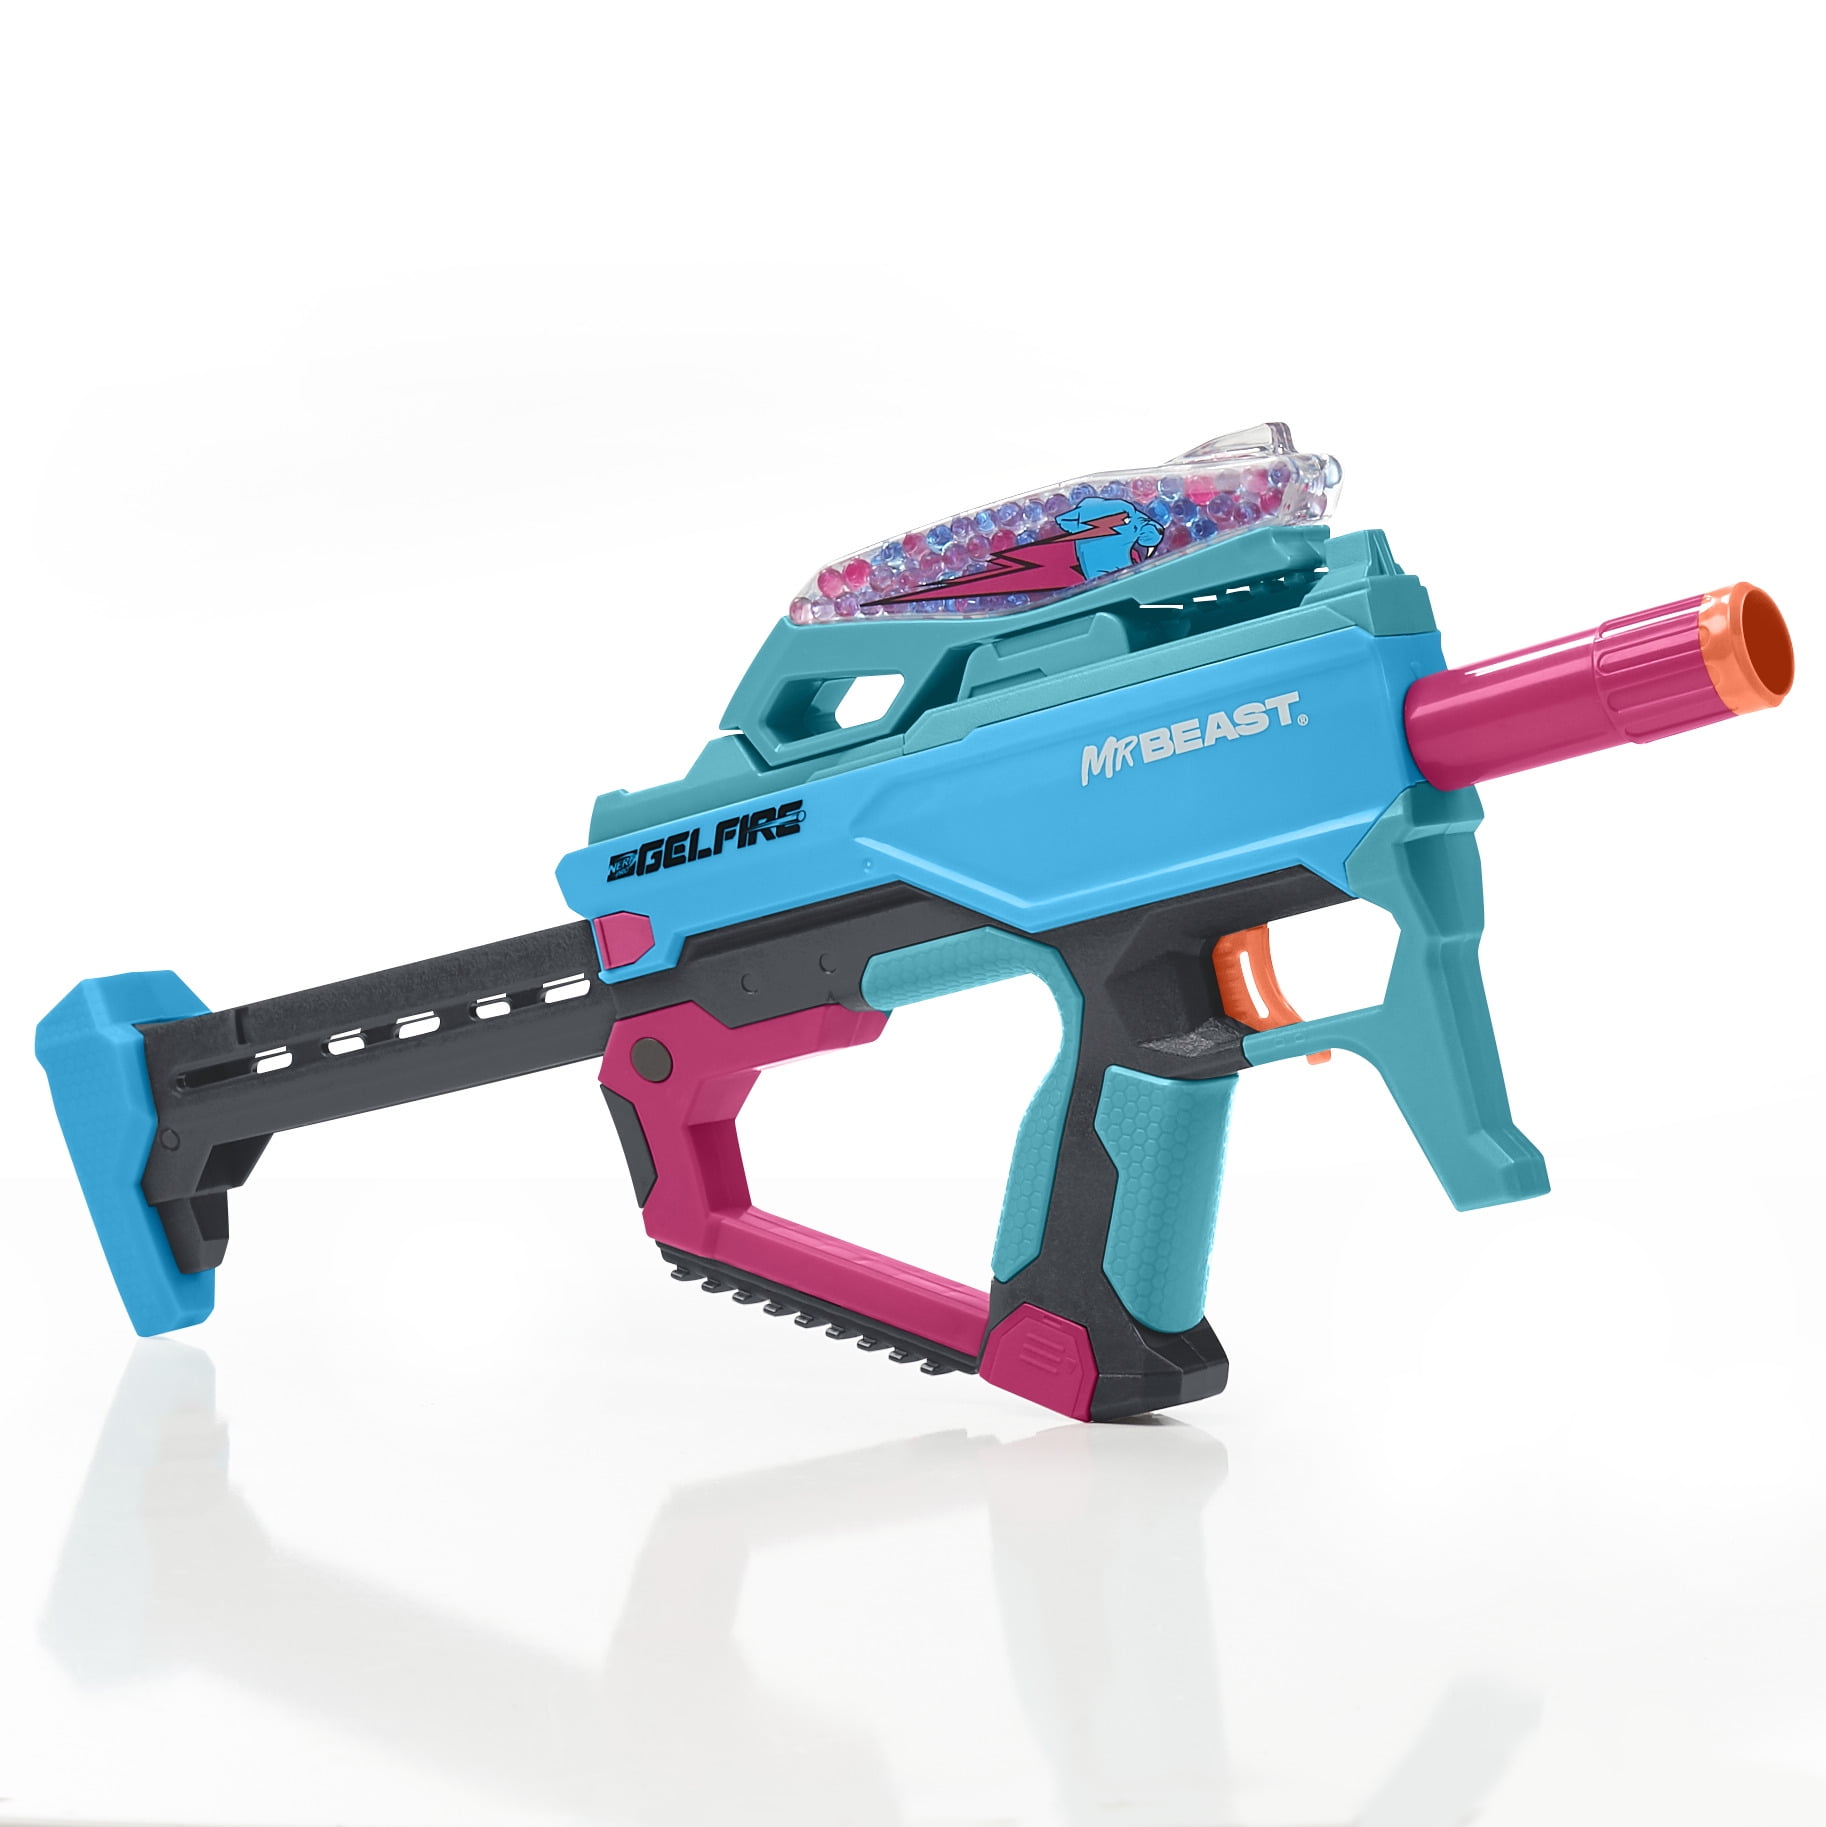 The Most Expensive Nerf Gun on , NerfGunAttachments